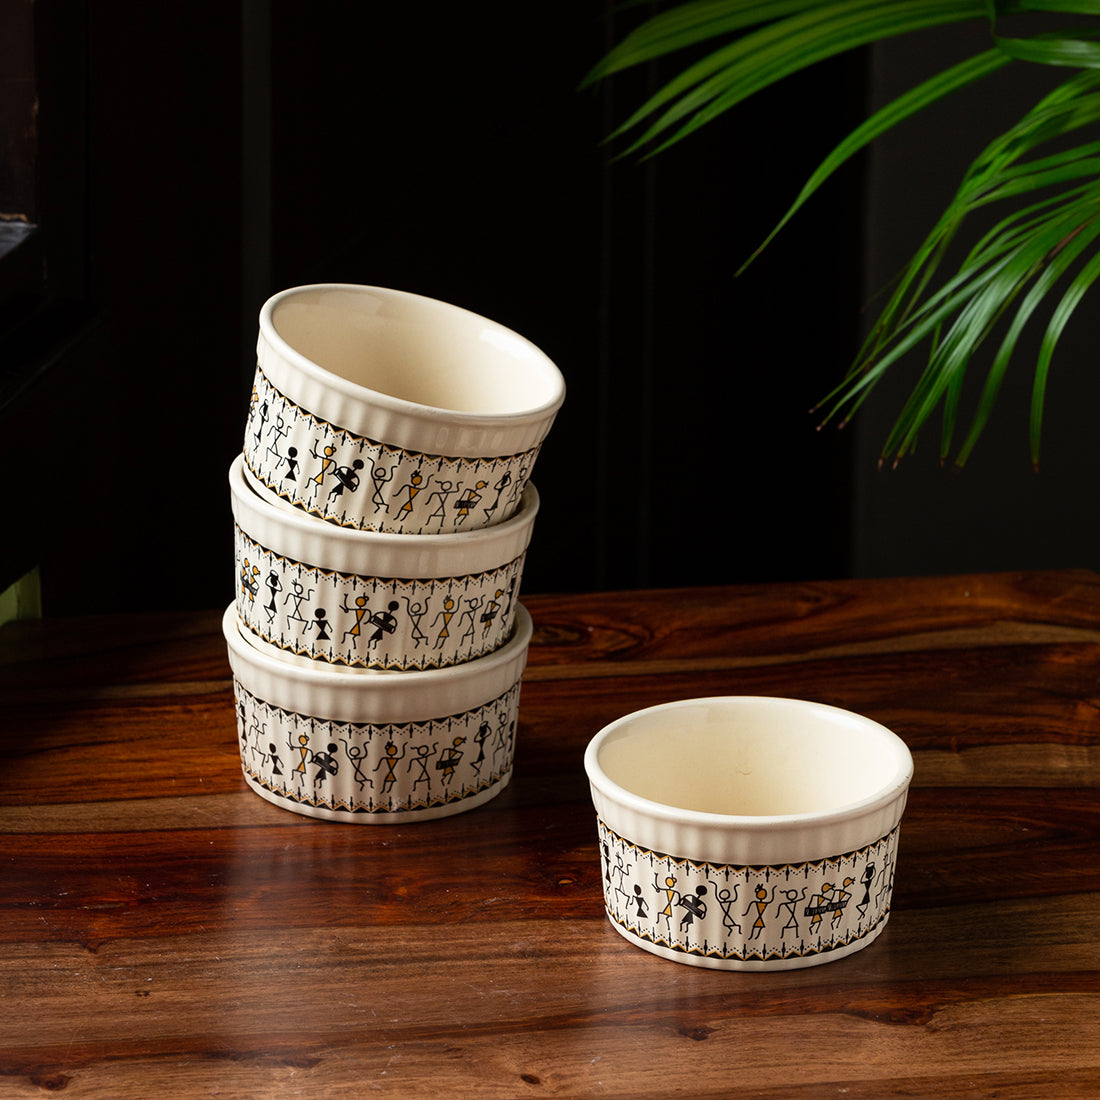 Whispers of Warli' Handcrafted Ceramic Dinner Bowls/Katoris (Set of 4, 180 ML, Microwave Safe)